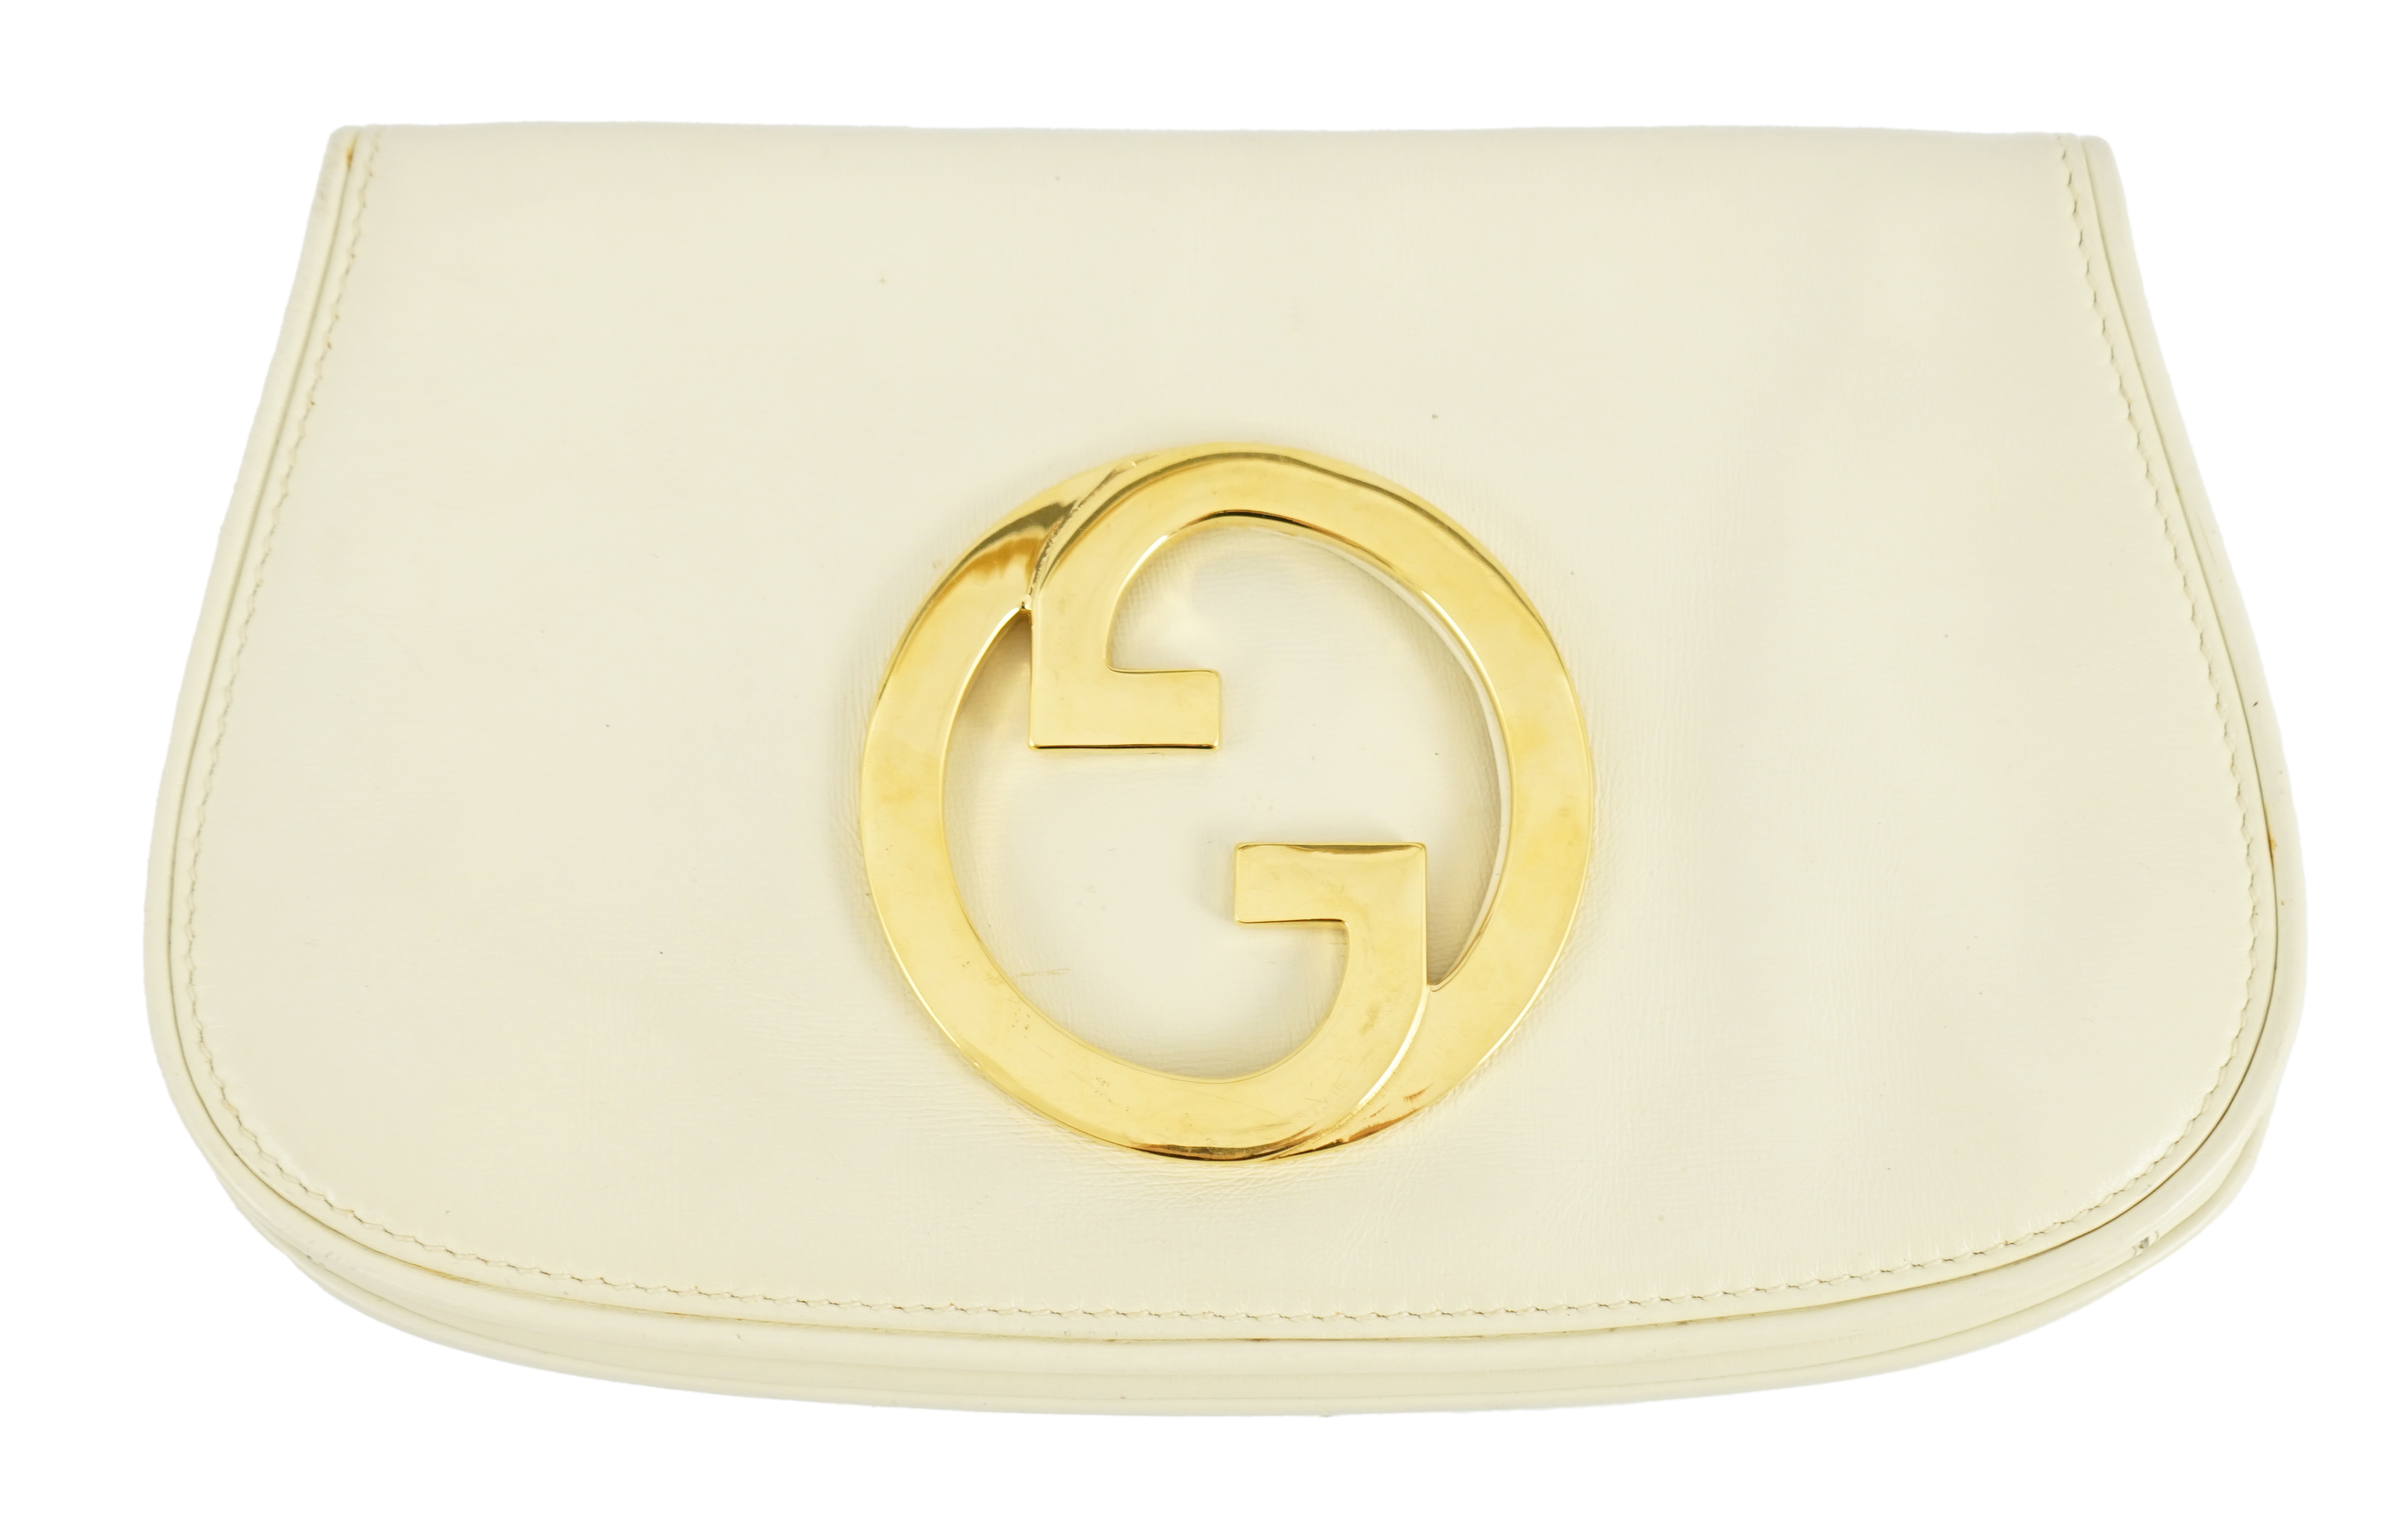 A vintage Gucci Blondie Unicorn ivory cream leather clutch bag, width 28cm, depth 4cm, height 16cm